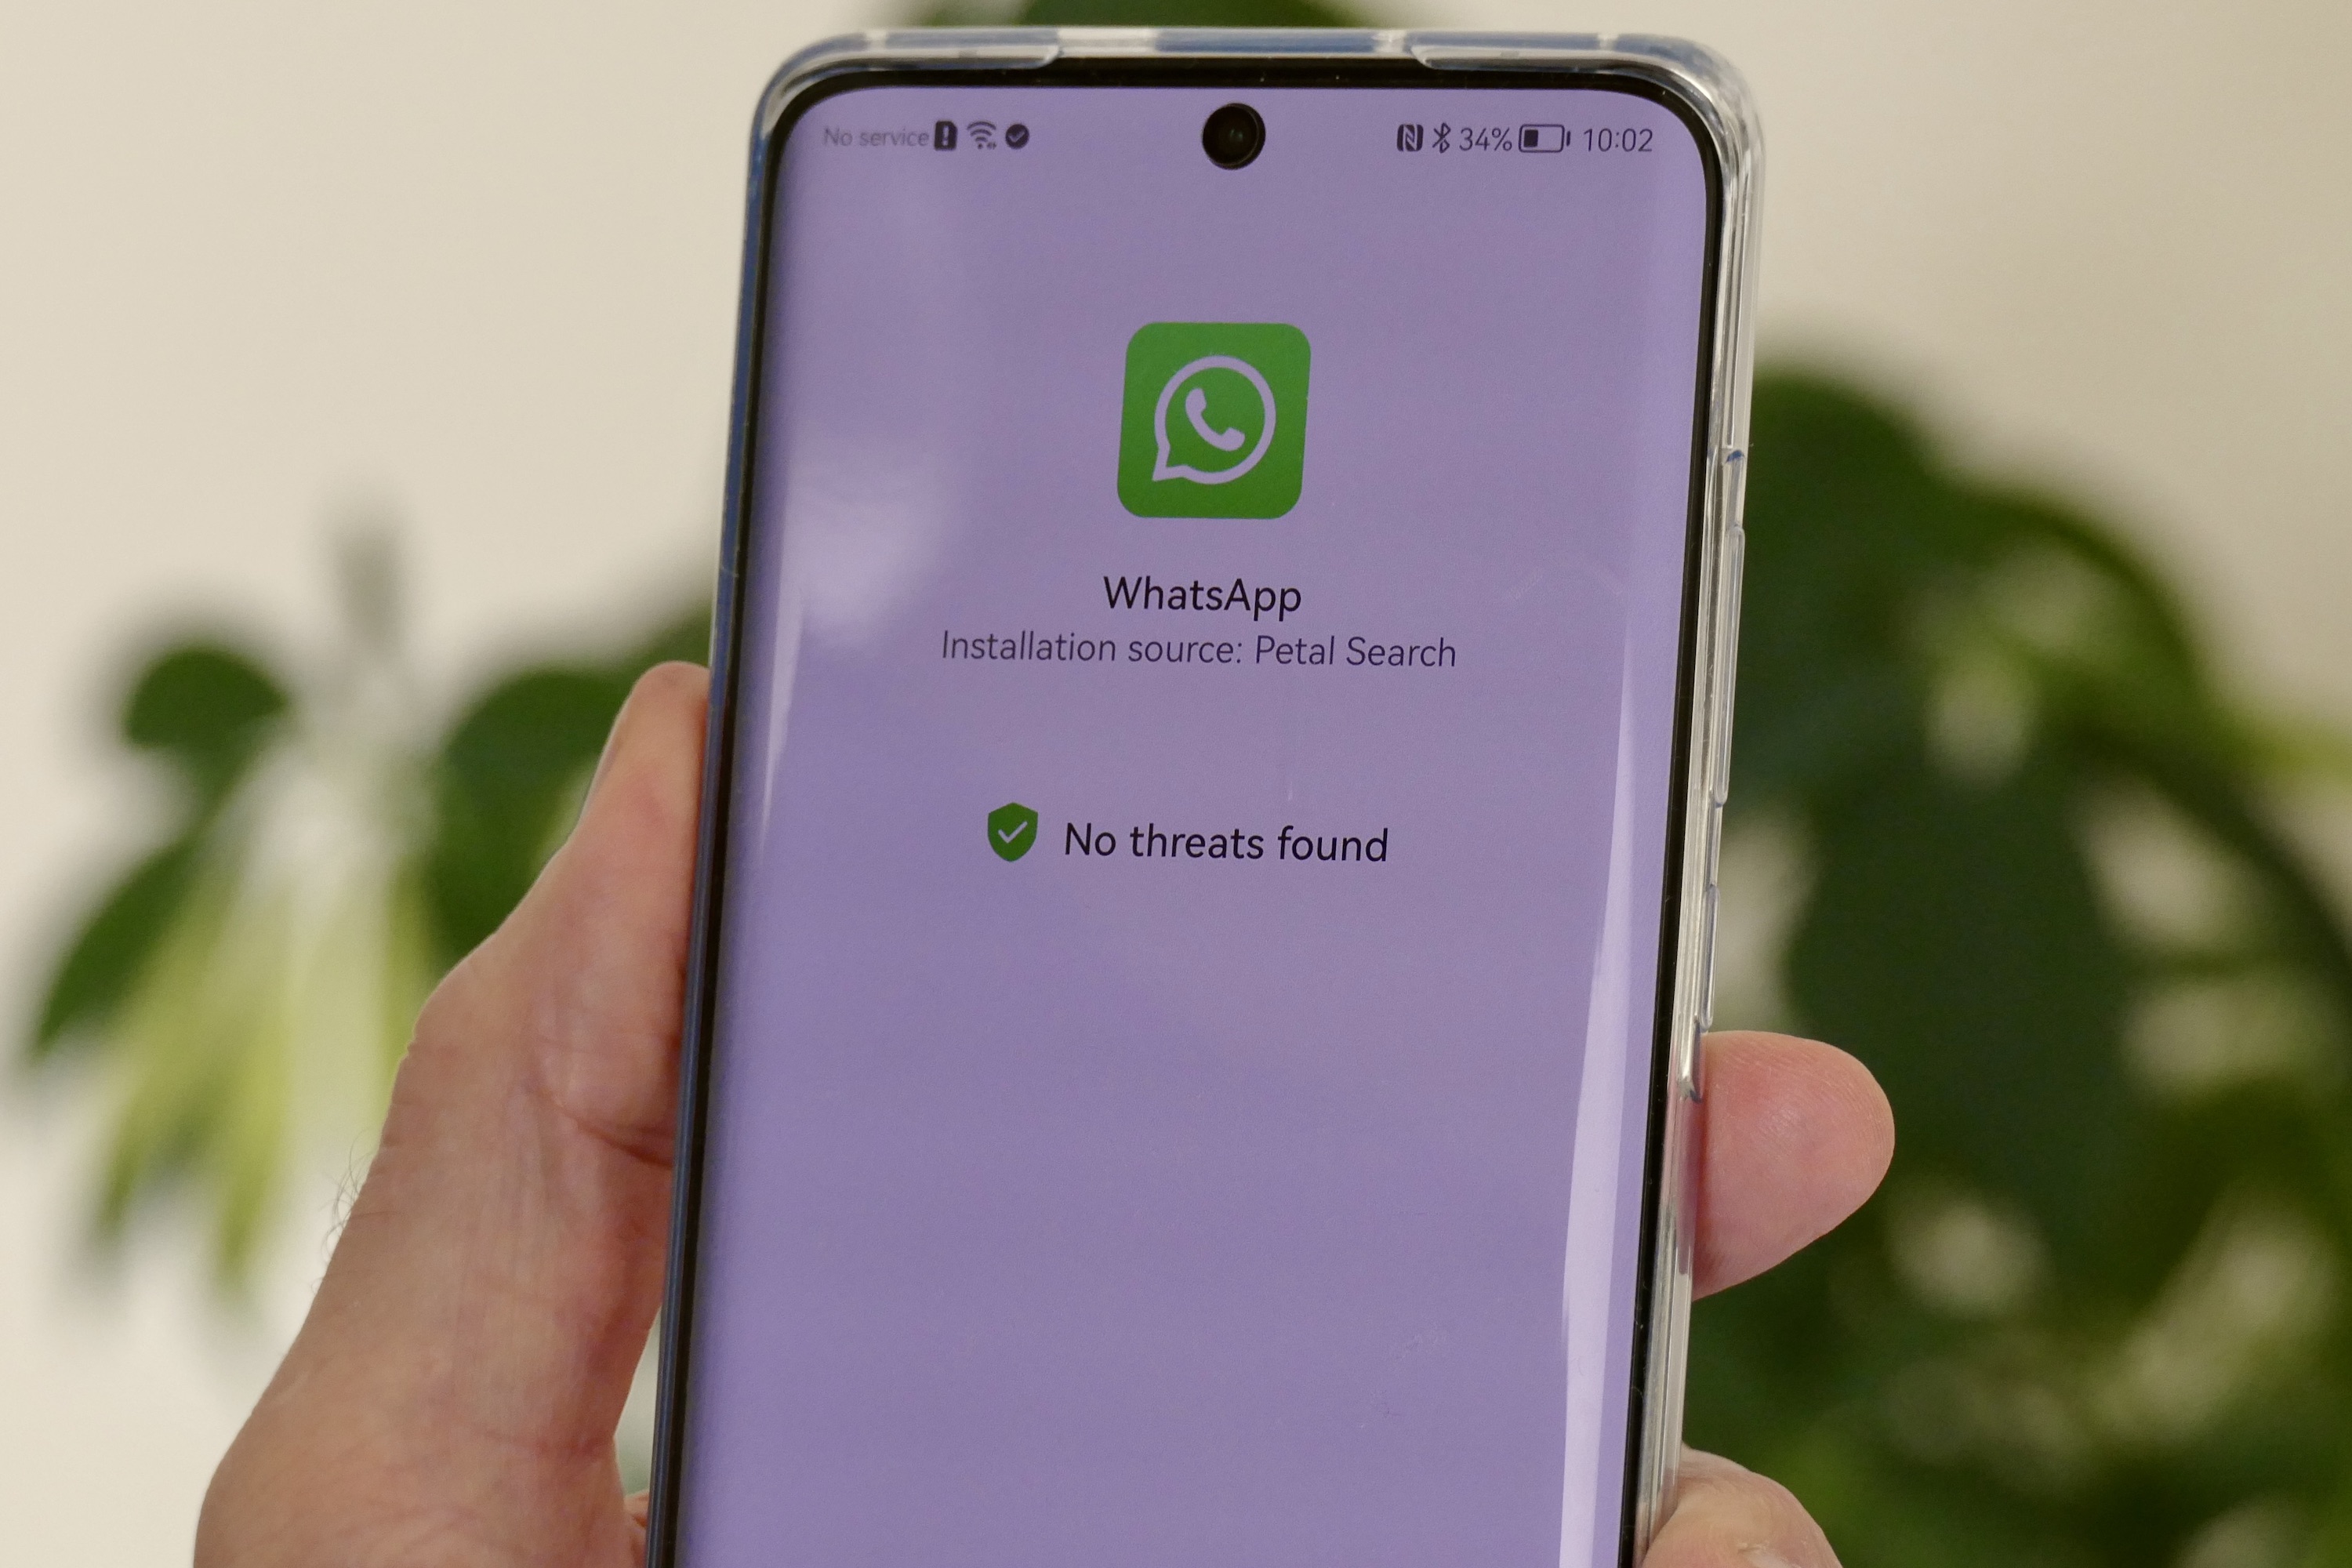 Installing WhatsApp on a Huawei phone using an APK file.